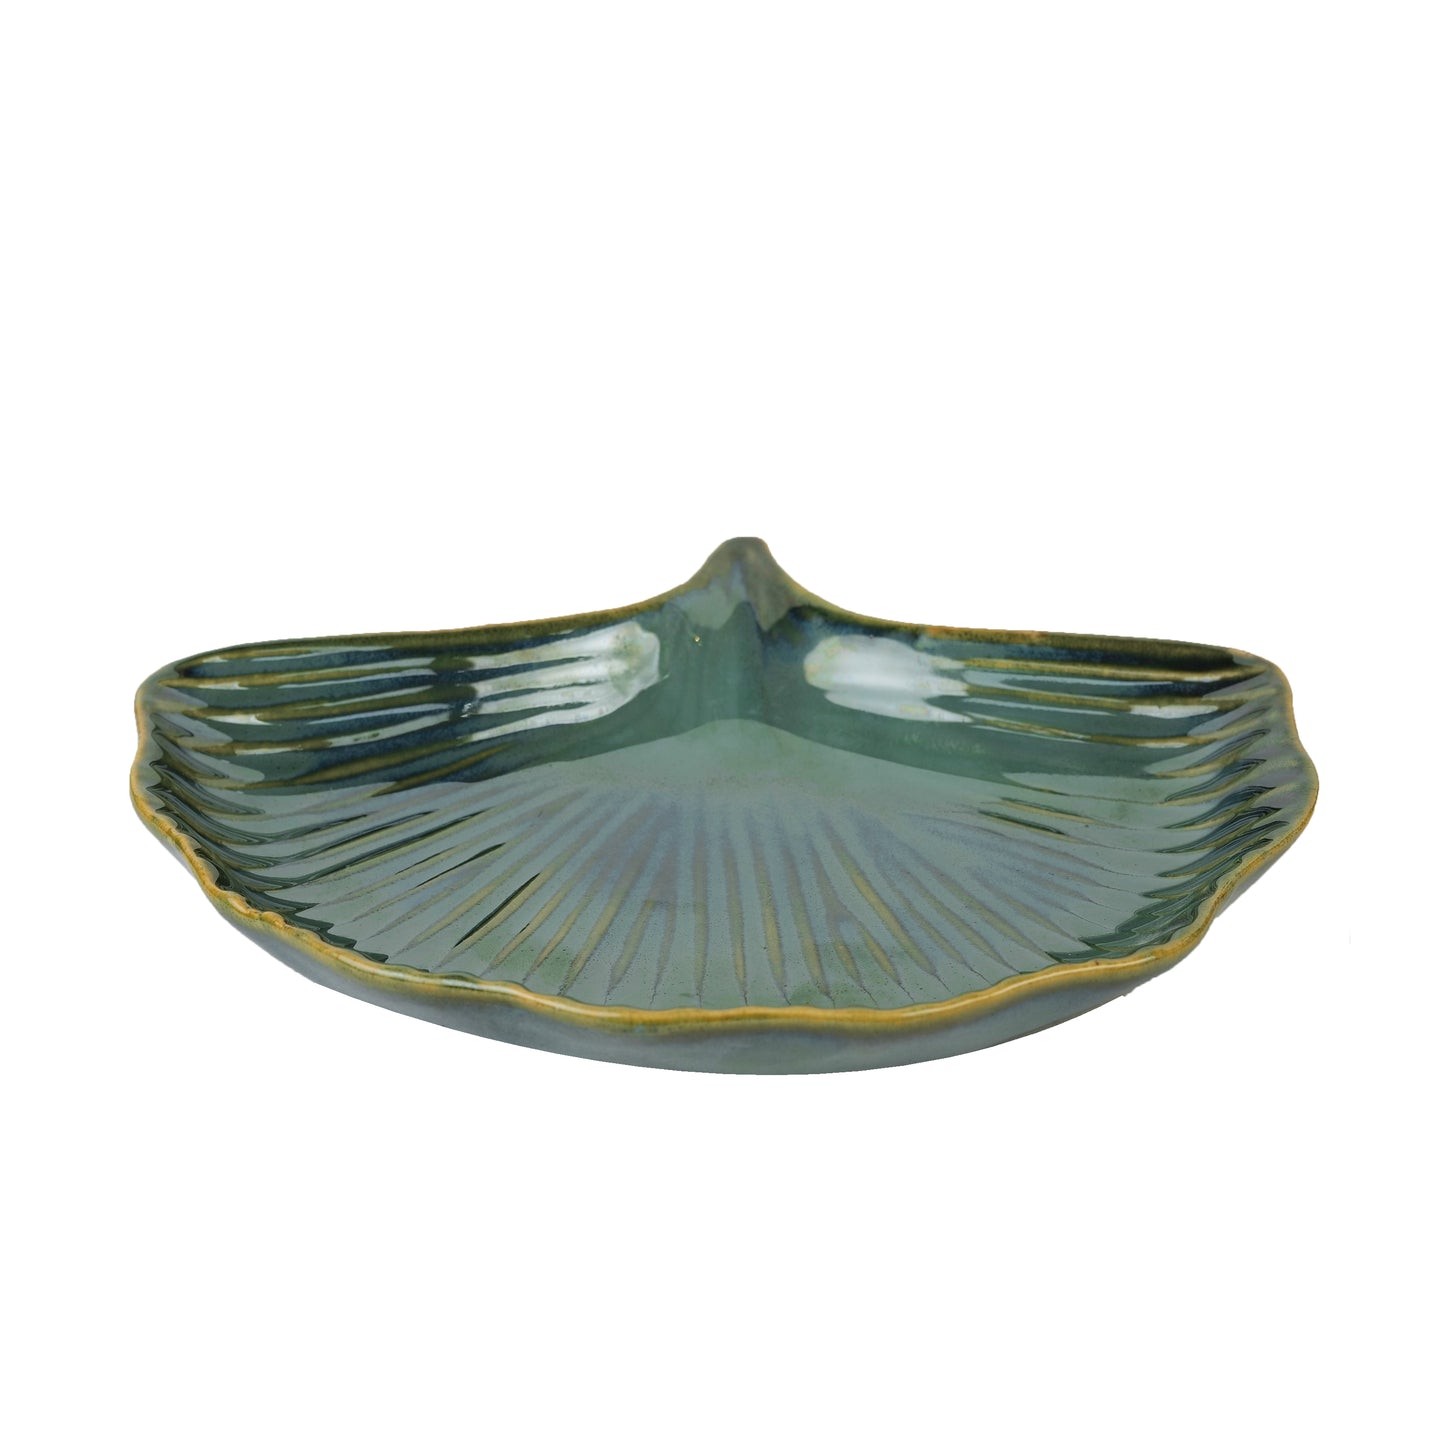 Sea Shell Ceramic Serving Platter In Green Color